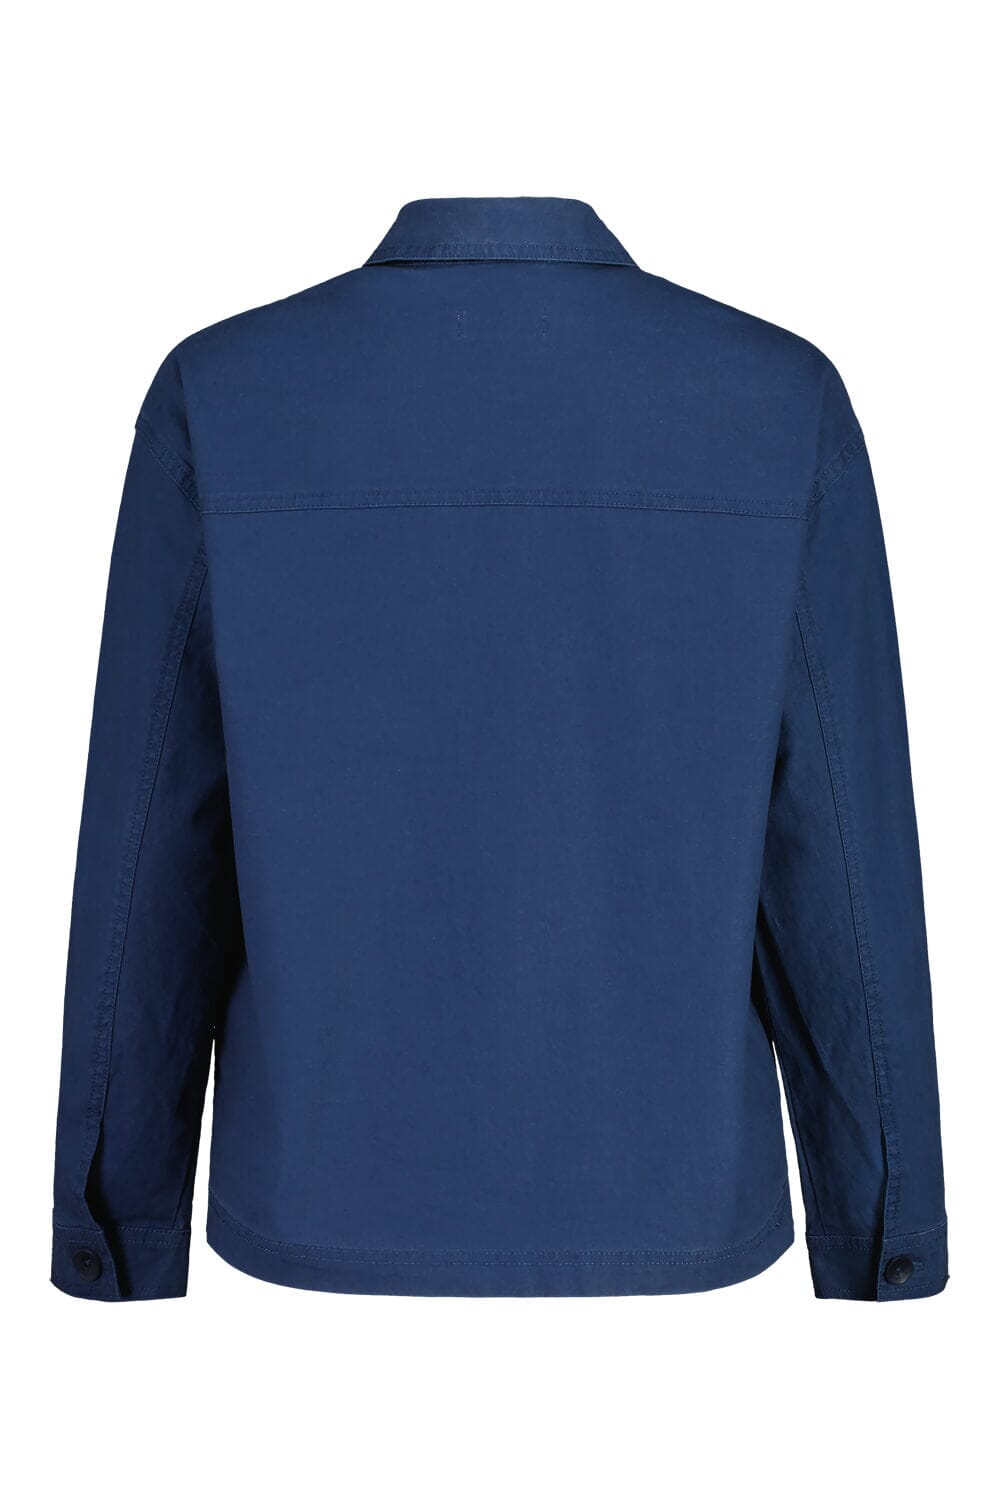 Maloja SchwarzensteinM. jacket - Hemp & Organic Cotton Midnight Jacket